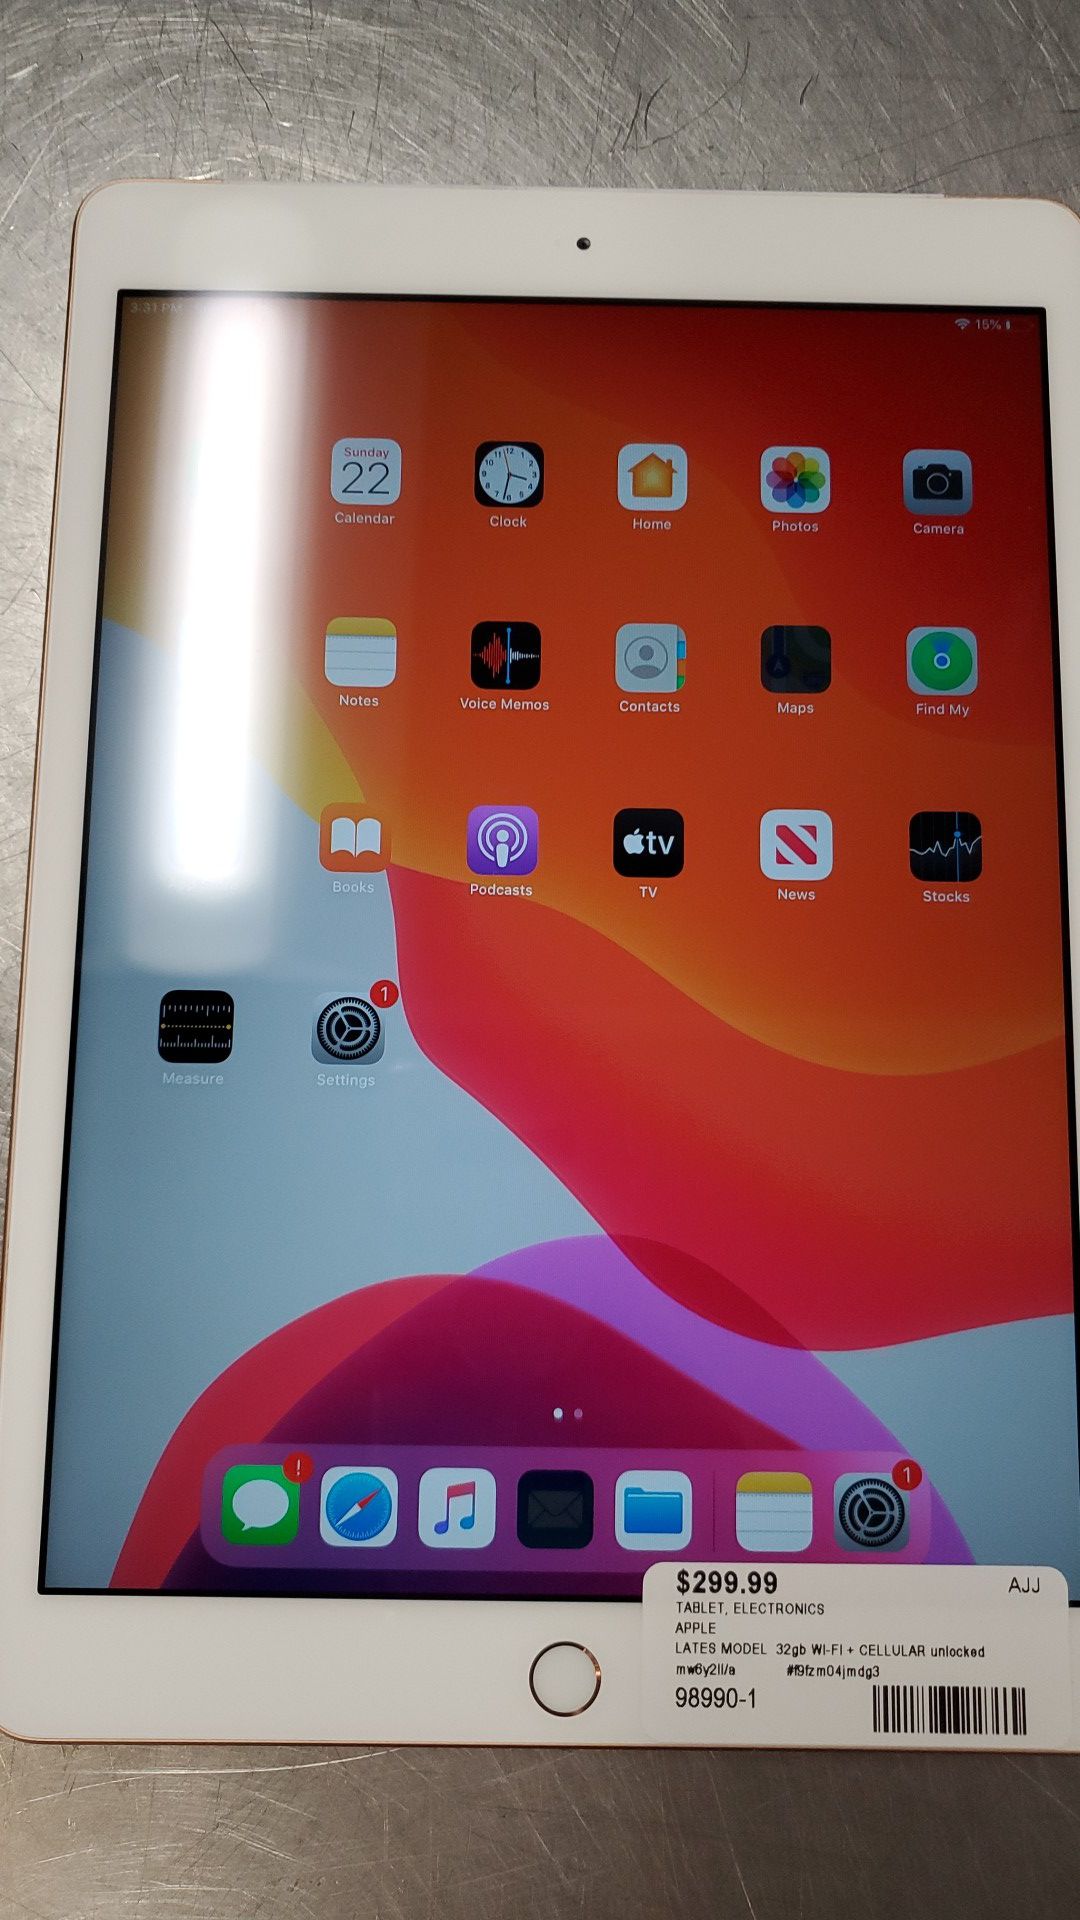 Apple iPad 7th Generation 32gb Wifi + Cellular Unlocked 98990